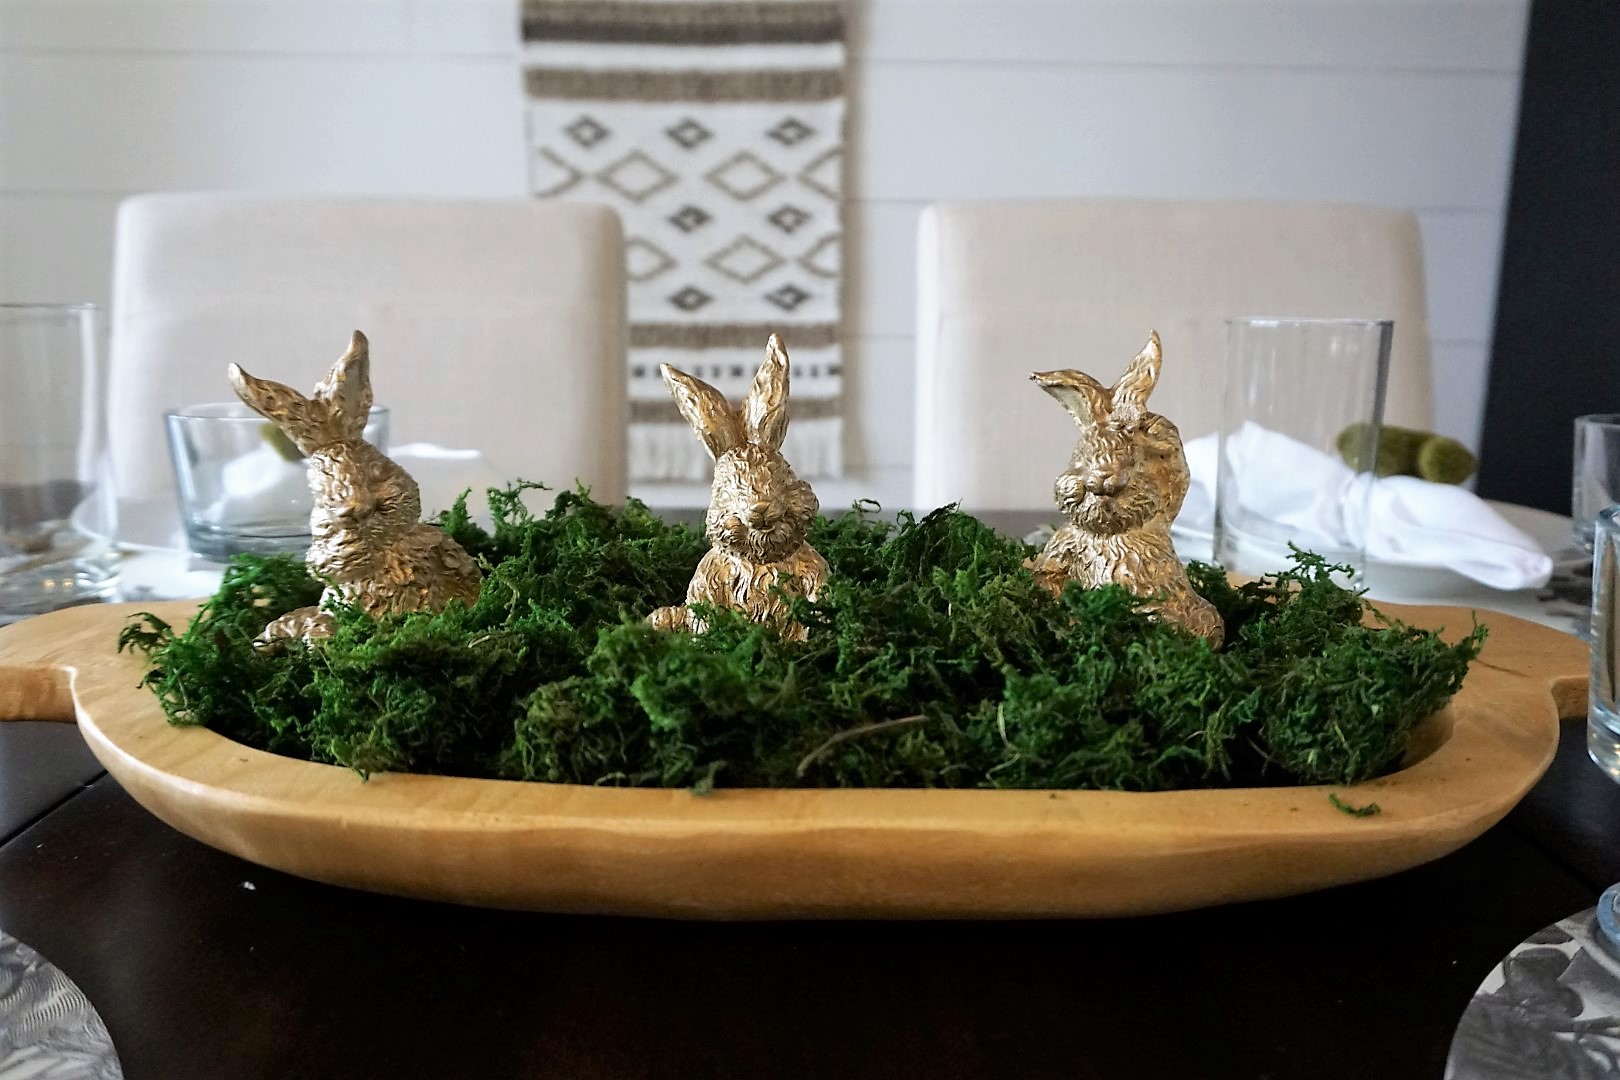  Gold bunnies, moss, and dough bowl make a perfect Easter centerpiece. 